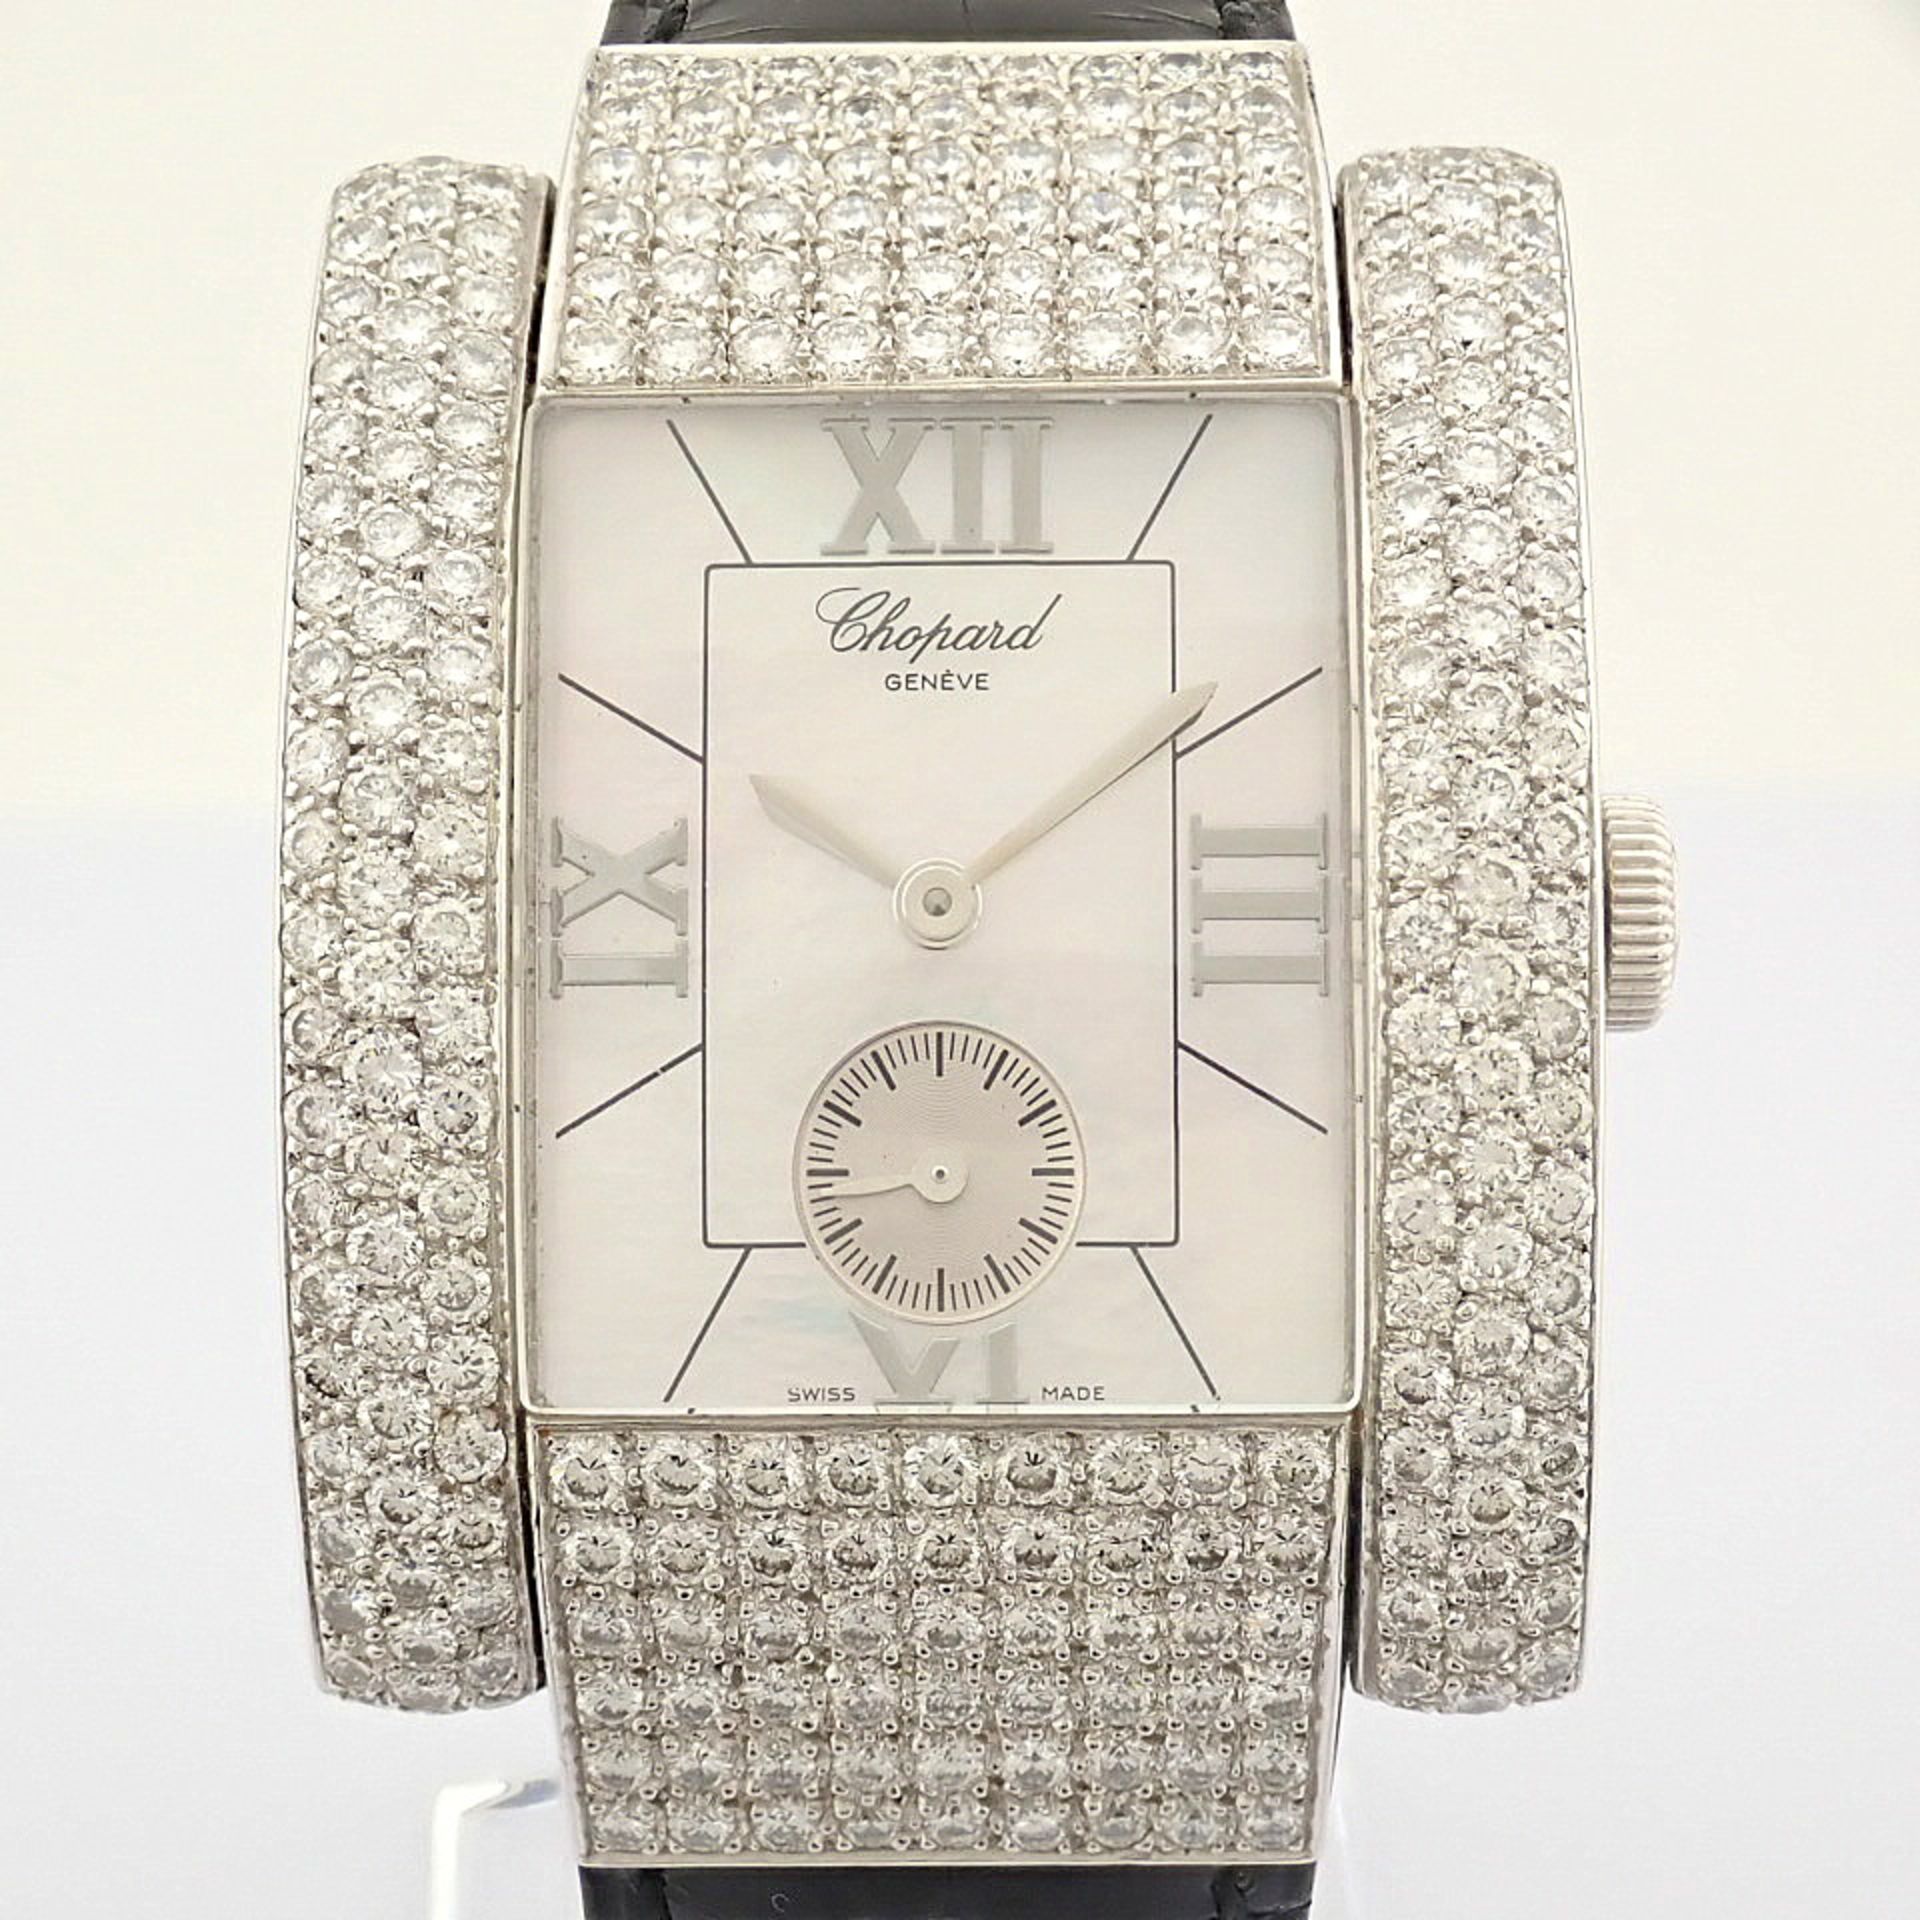 Chopard / La Strada - Lady's 18K White Gold Wrist Watch - Image 4 of 13